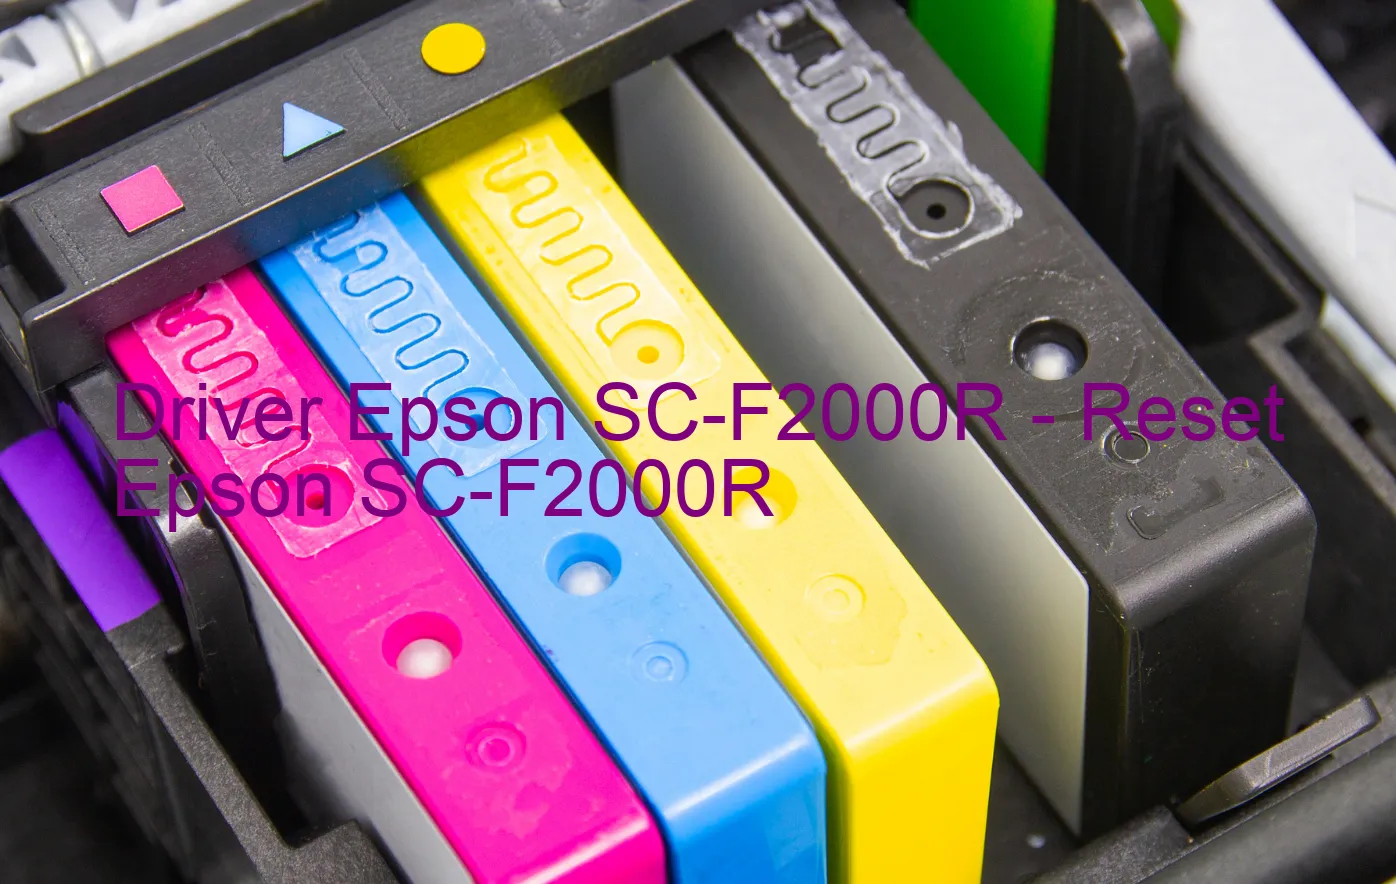 Epson SC-F2000Rのドライバー、Epson SC-F2000Rのリセットソフトウェア